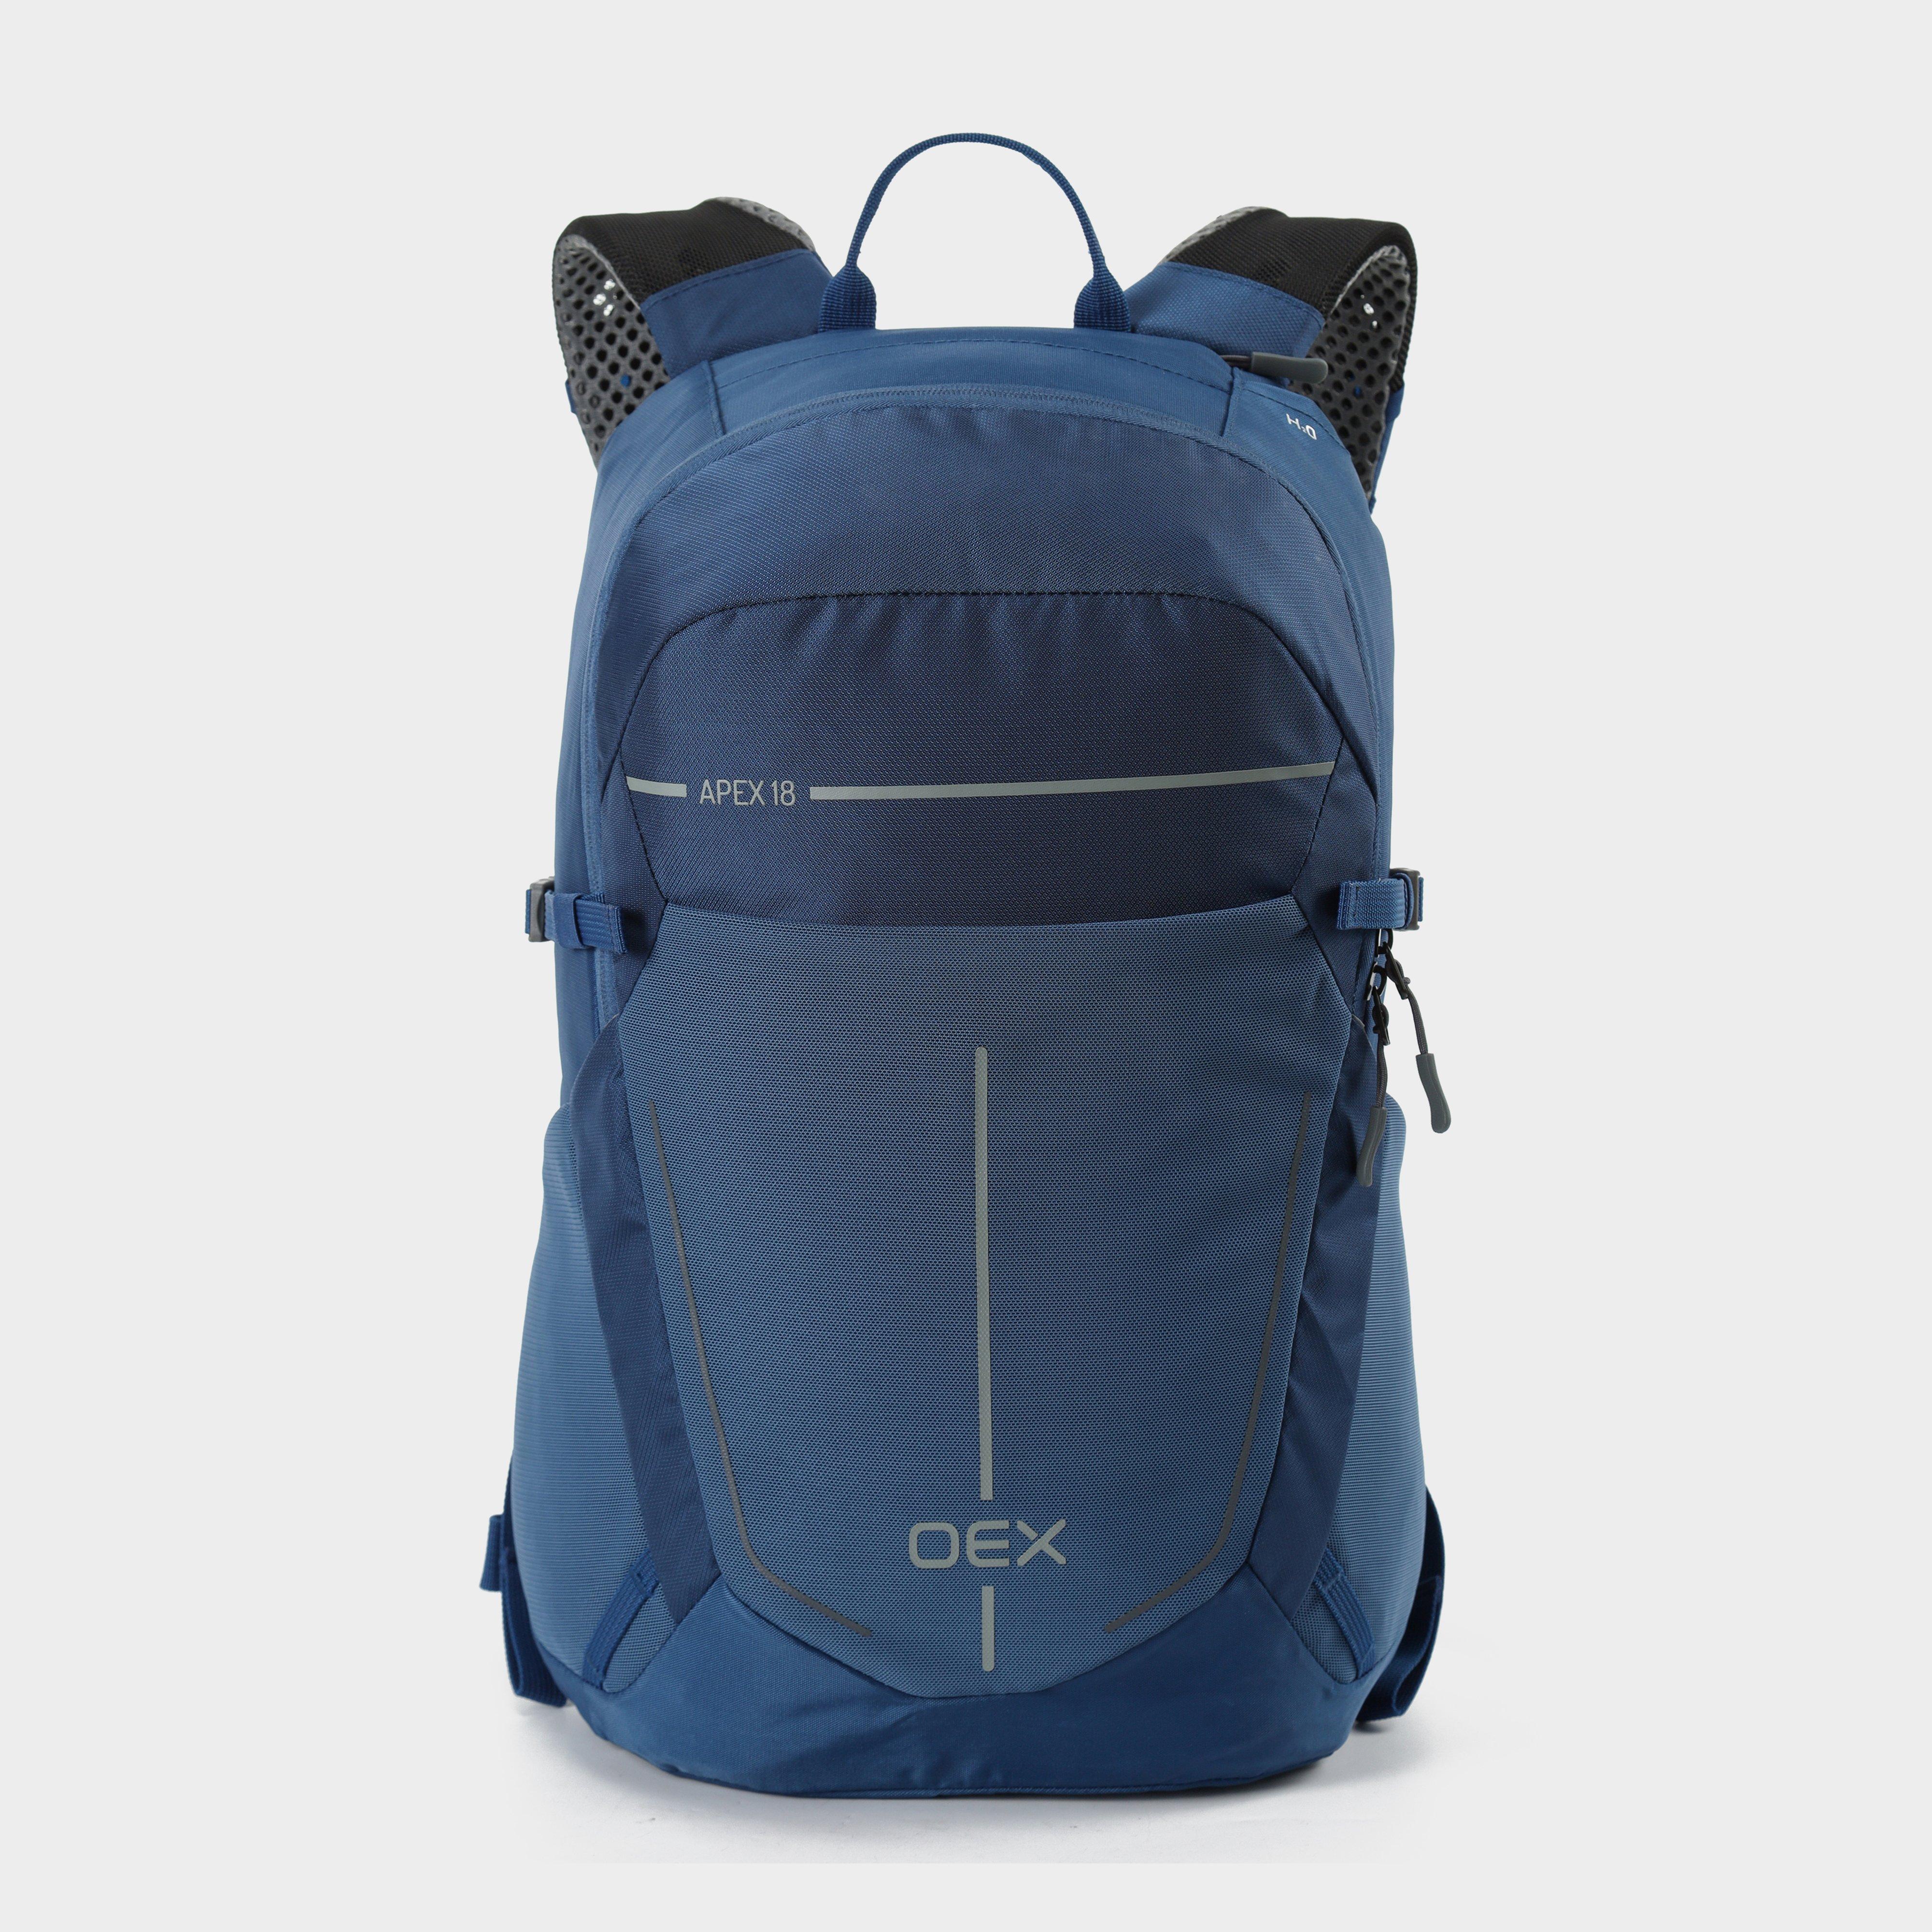  OEX Apex 18L Backpack